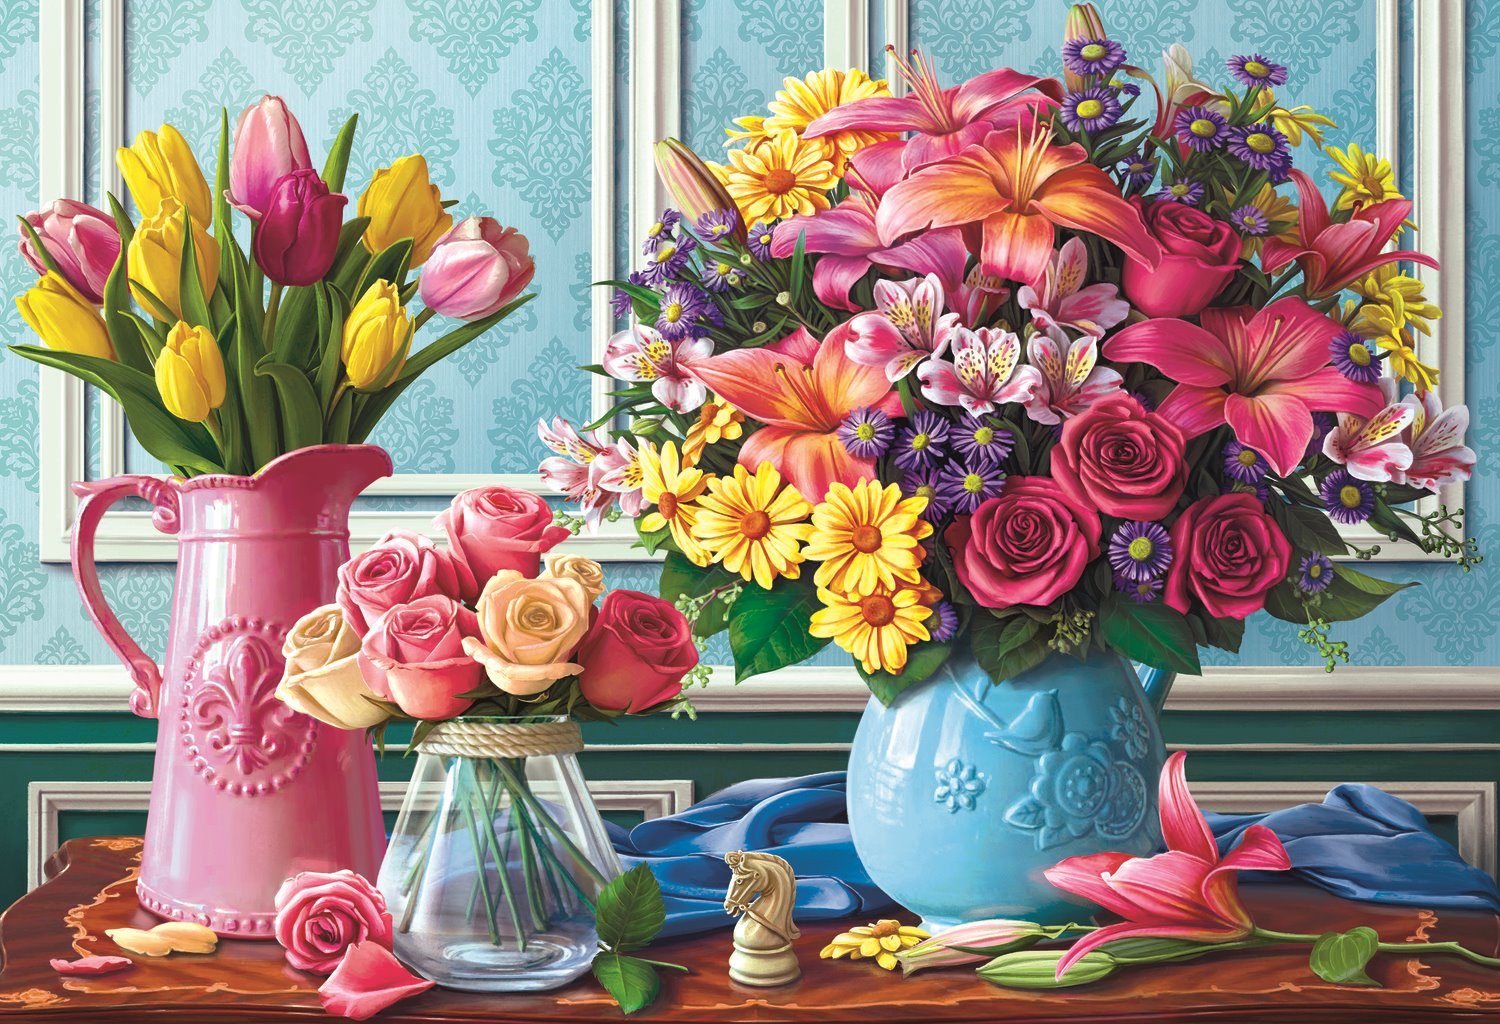 Puzzle Flowers in Vases, 1 500 pieces